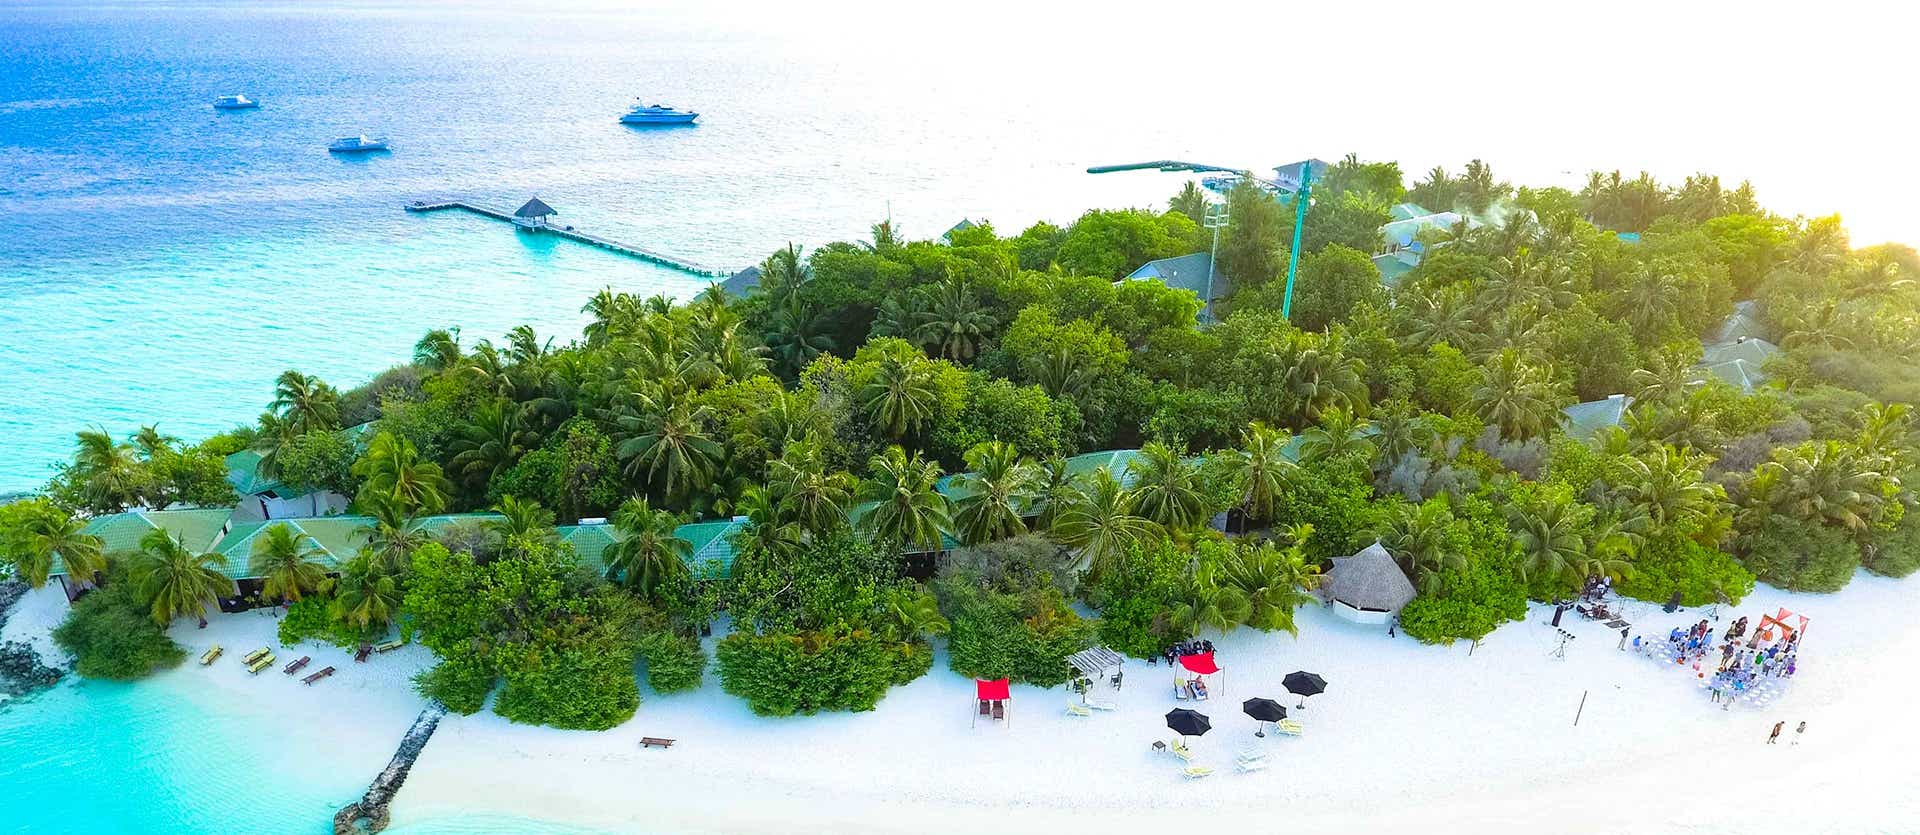 Eriyadu Island Resort <span class="iconos separador"></span> Maldives